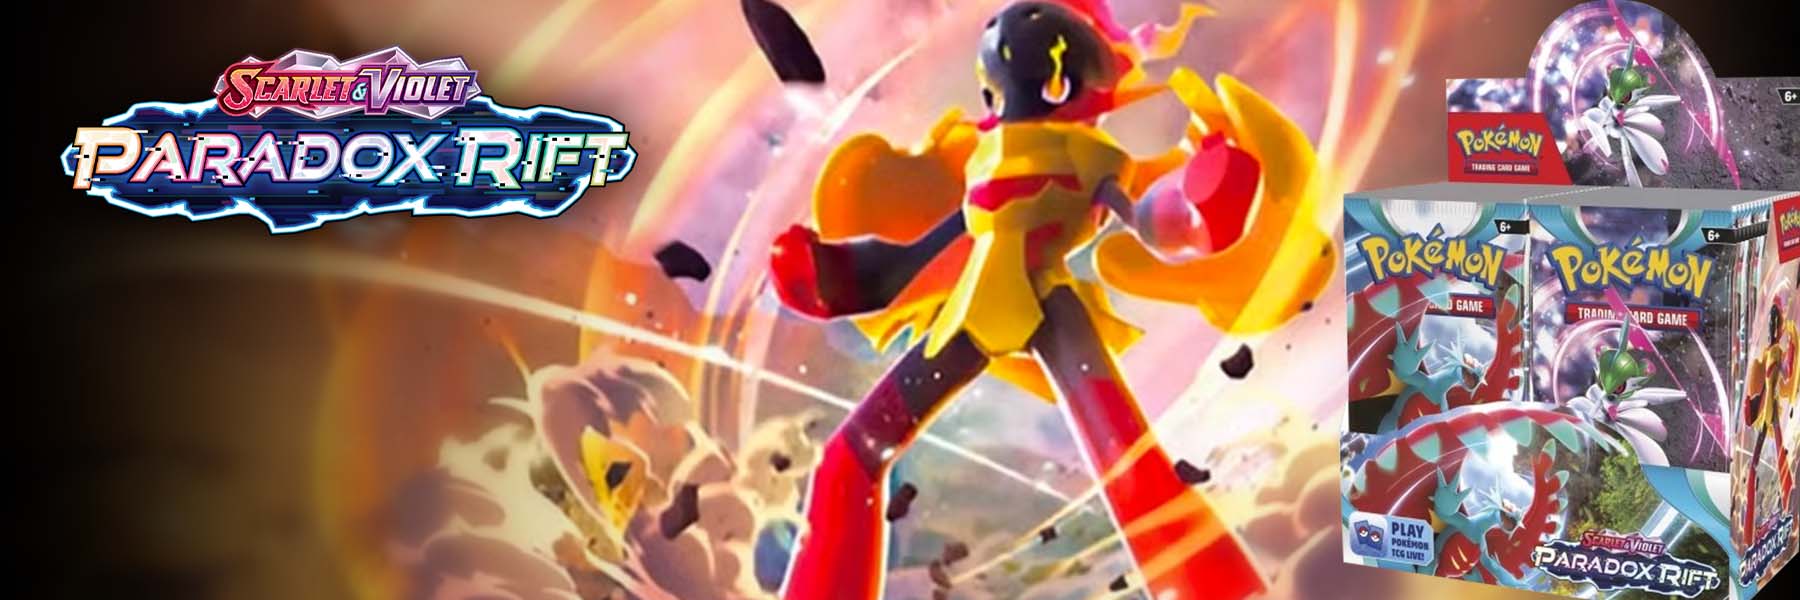 Pikachu & Zekrom GX - 184/181 - Secret Rare - Pokemon » Pokemon Singles »  Sun & Moon: Team Up - Blue Ox Games